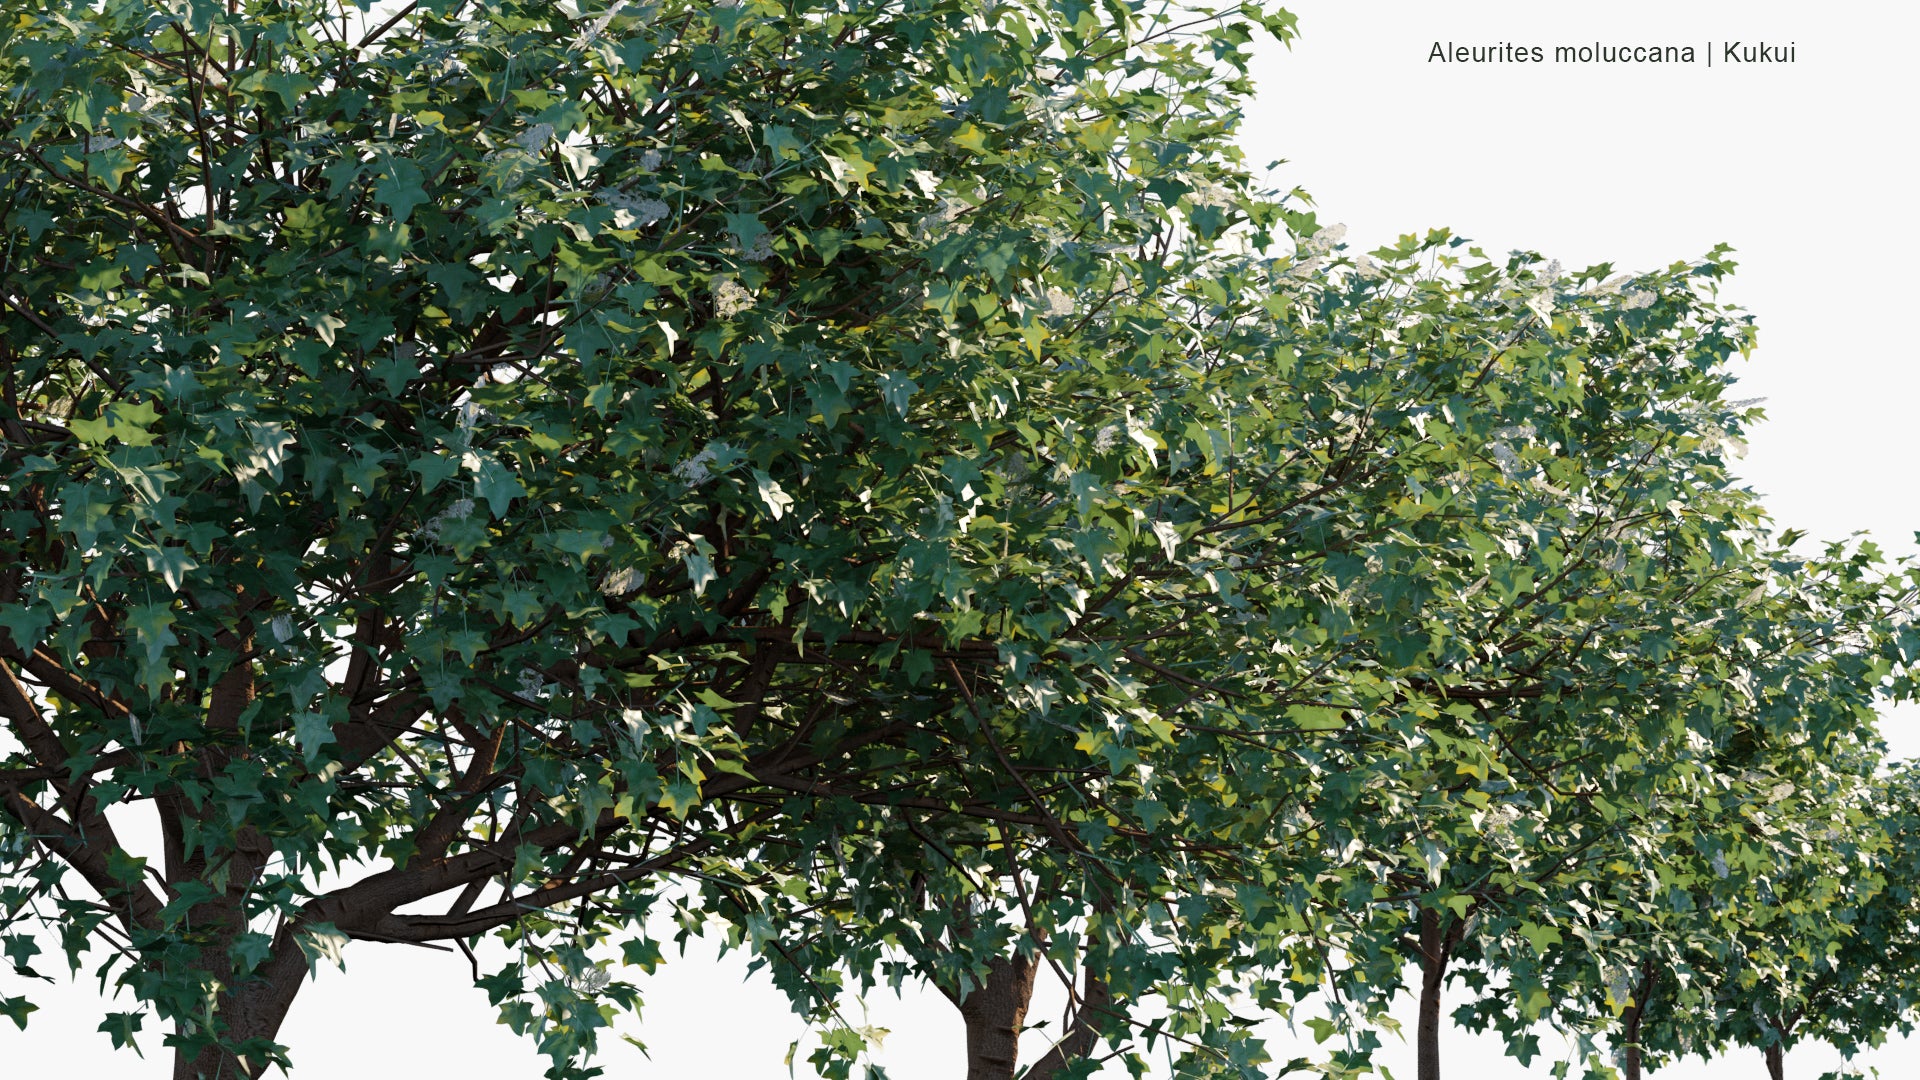 Low Poly Aleurites Moluccana - Candlenut, Kukui Nut Tree, Candleberry, Indian Walnut, Kemiri, Varnish Tree, Nuez de la India, Buah Keras, Godou (3D Model)